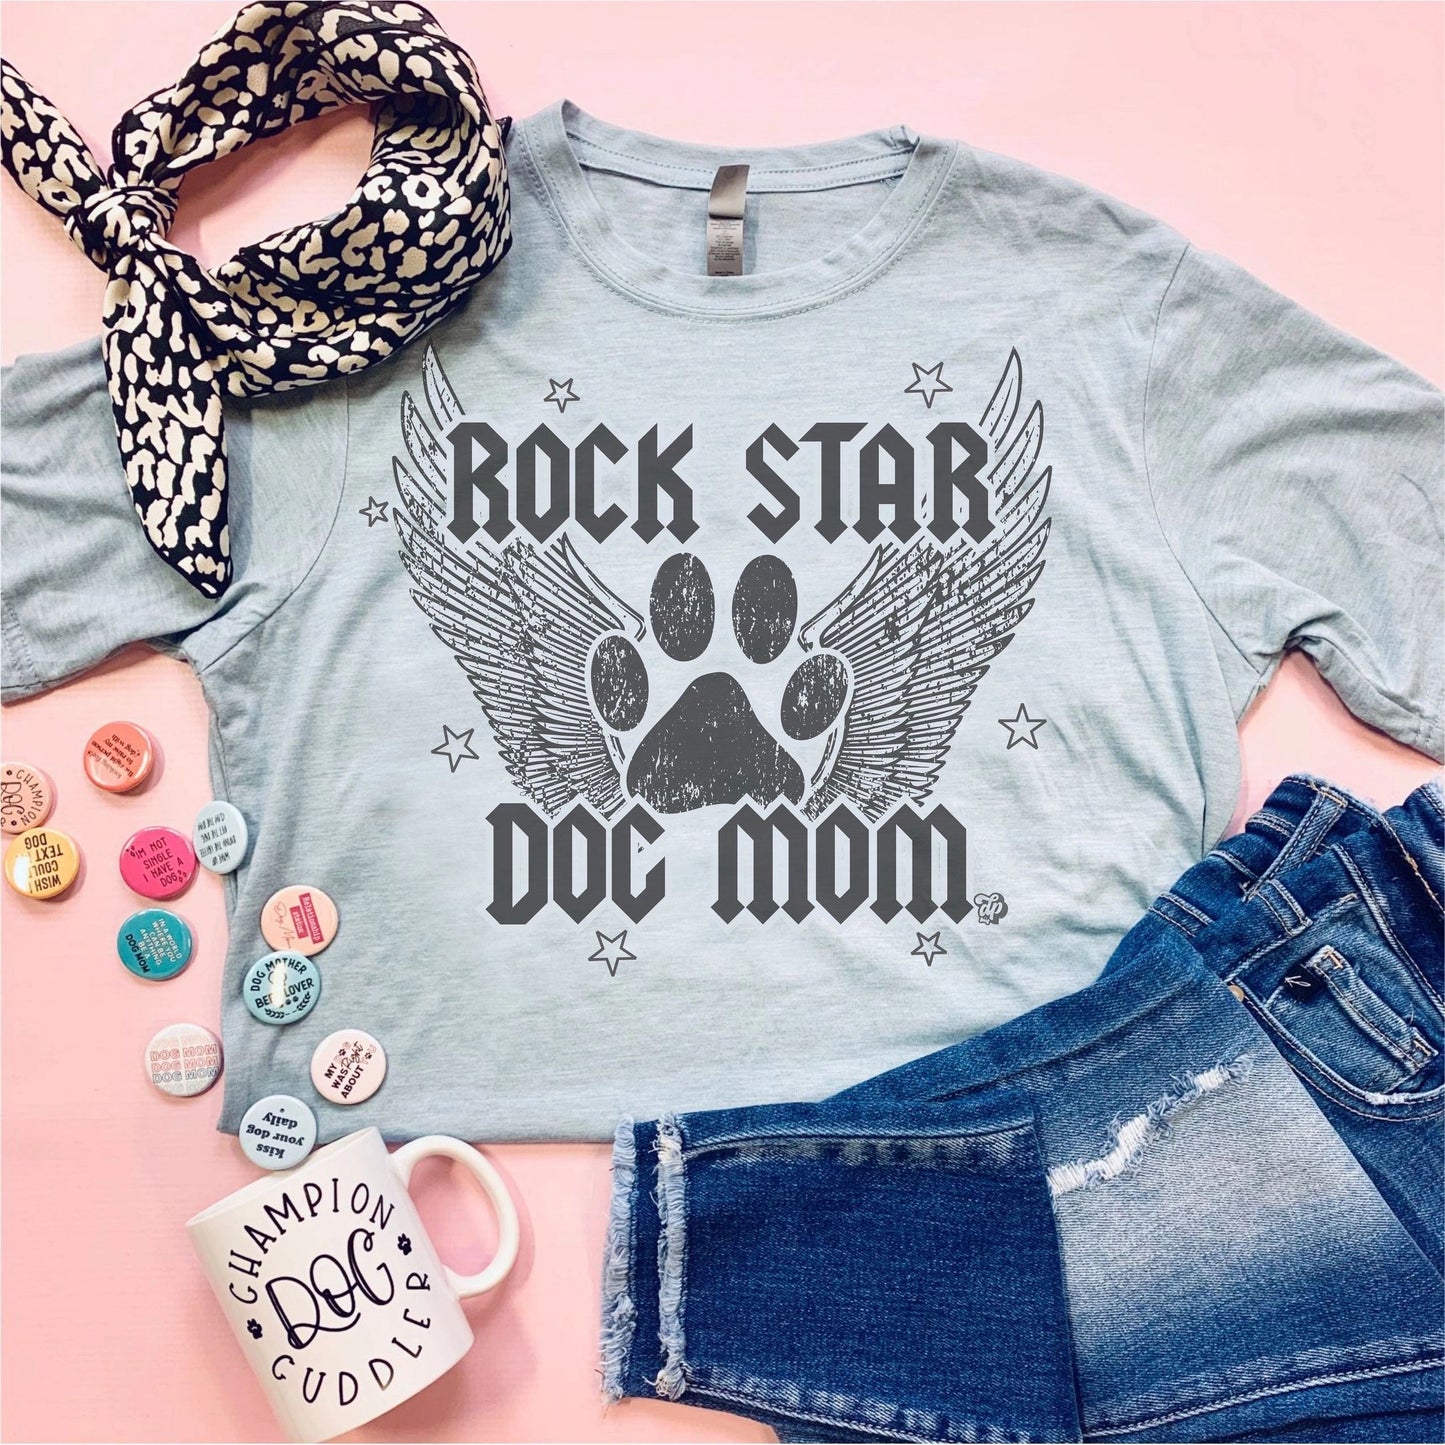 Rock Star Dog Mom Tee